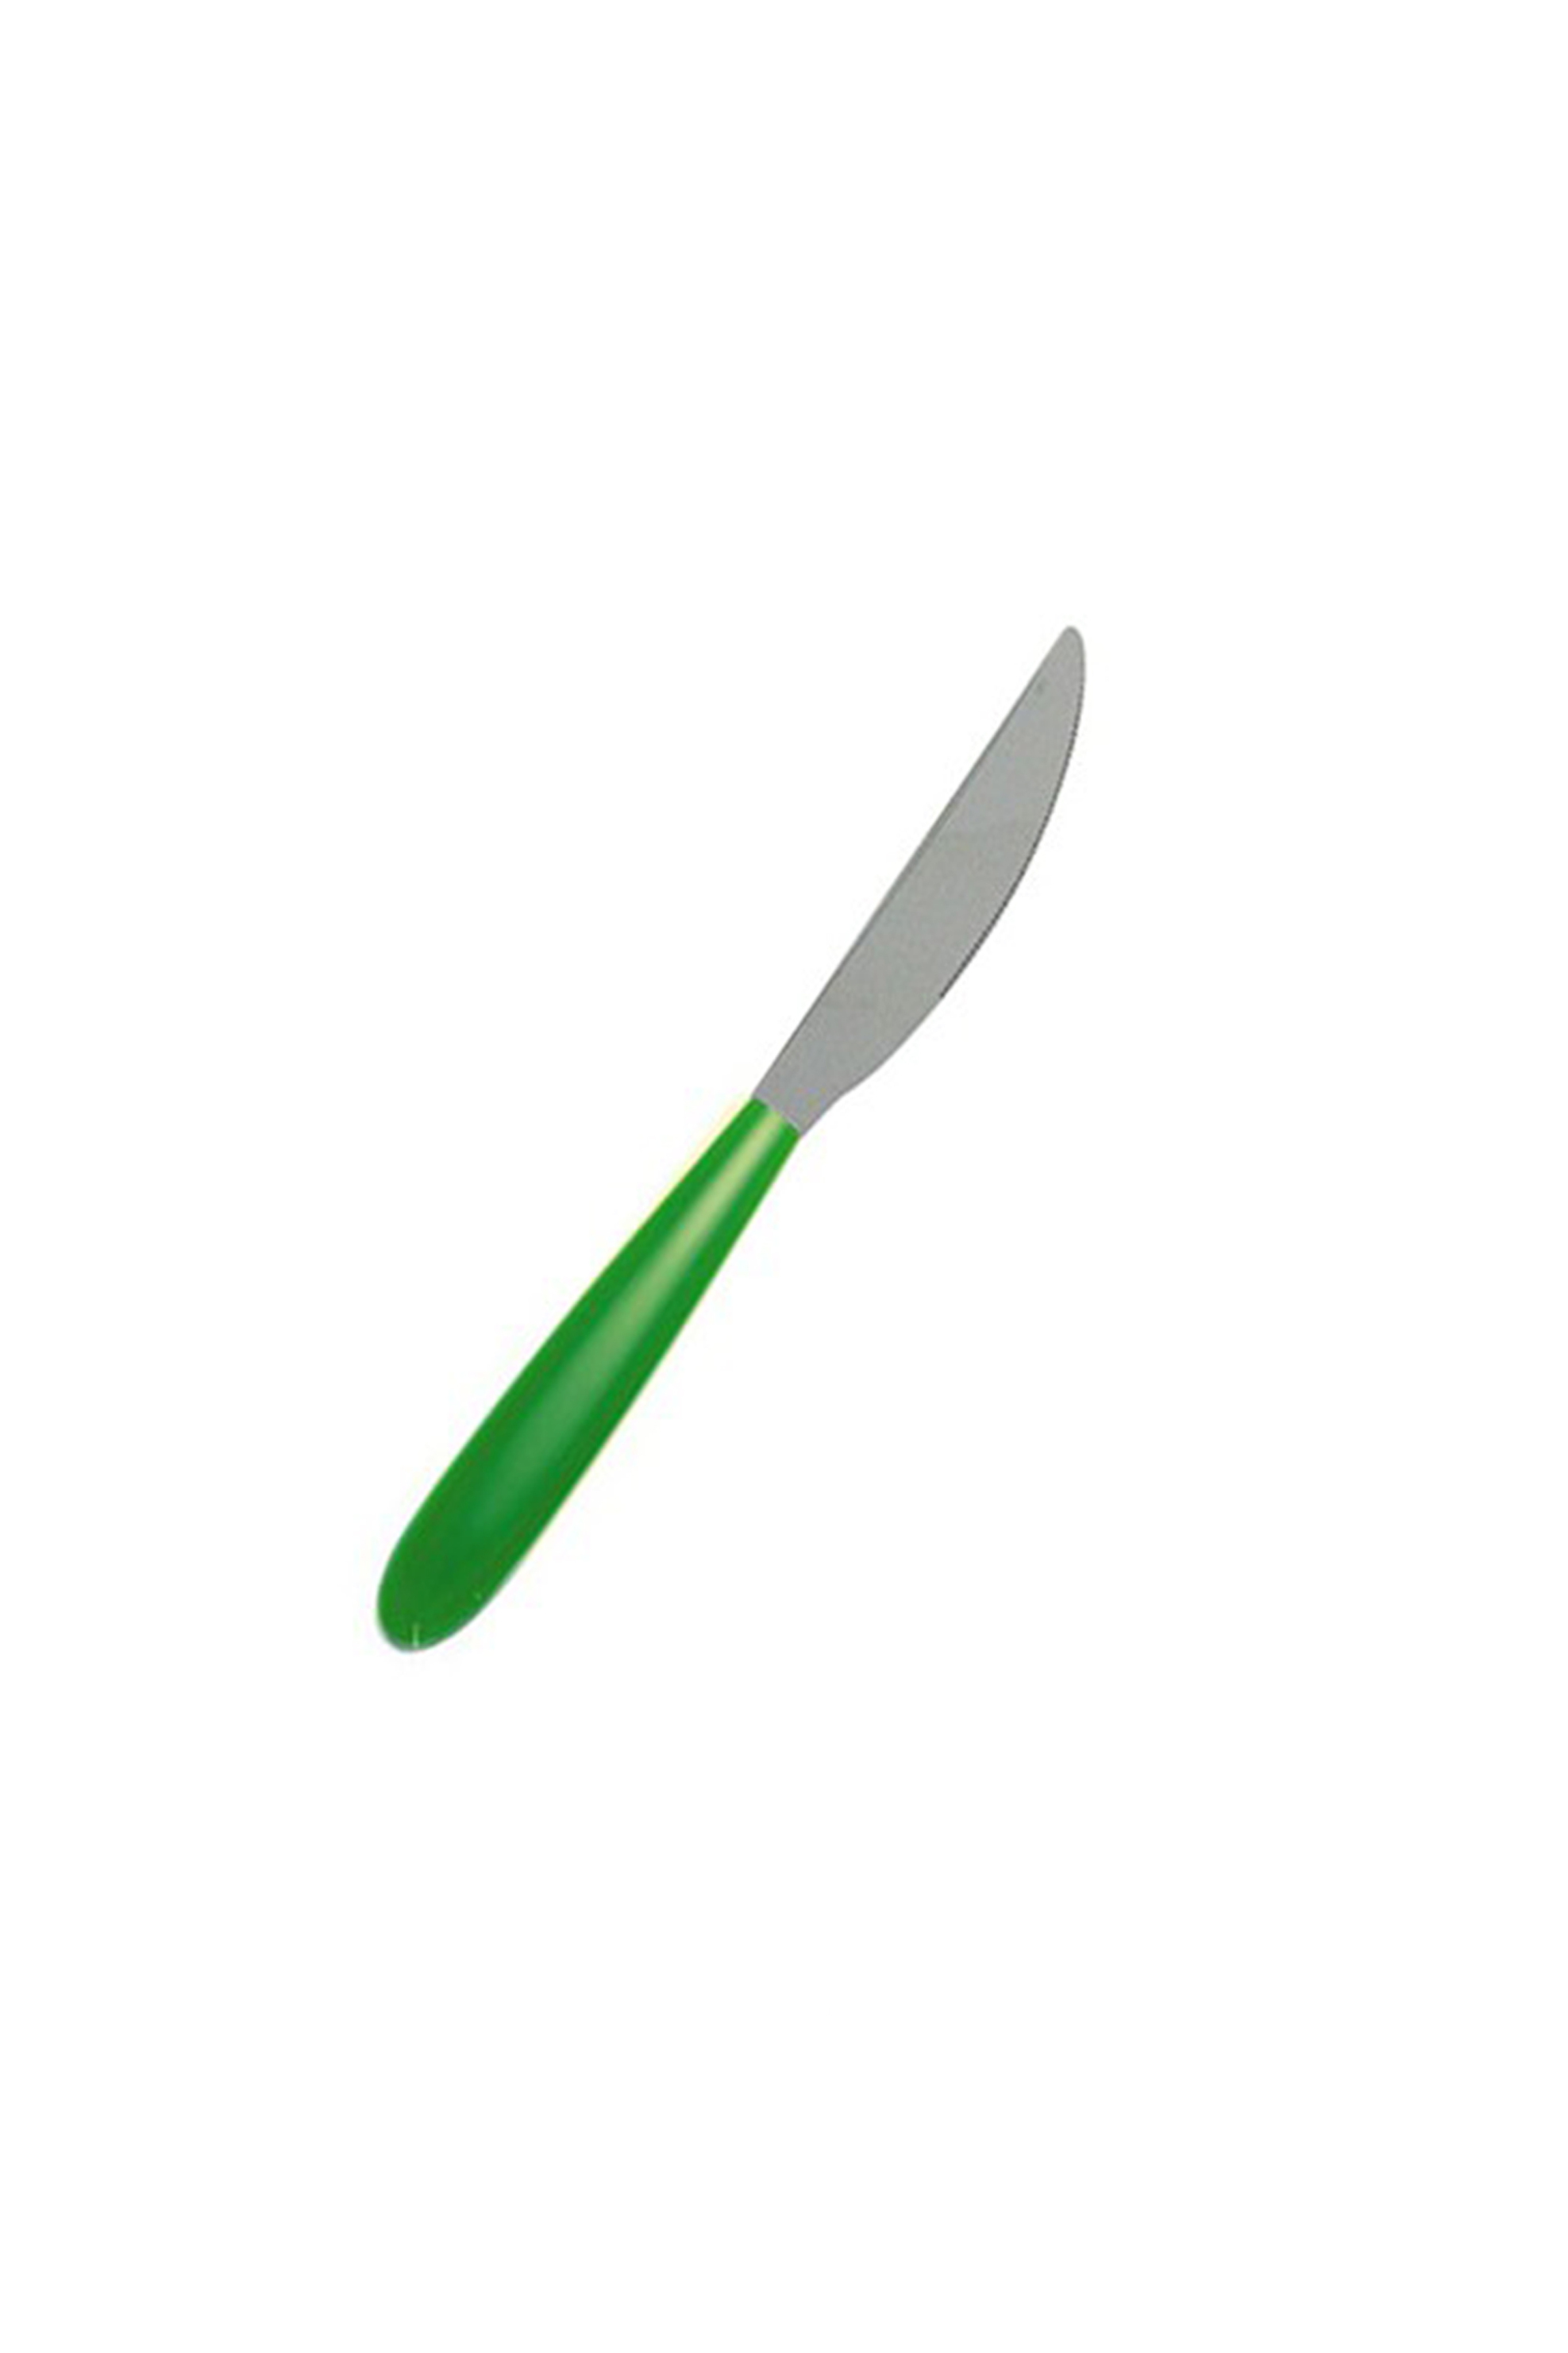 Home > ΚΟΥΖΙΝΑ > Αξεσουάρ Kουζίνας > Σετ μαχαιροπίρουνα EME μαχαίρι φαγητού ανοξείδωτο πράσινο ανοιχτό "Vero" - X10VR/37